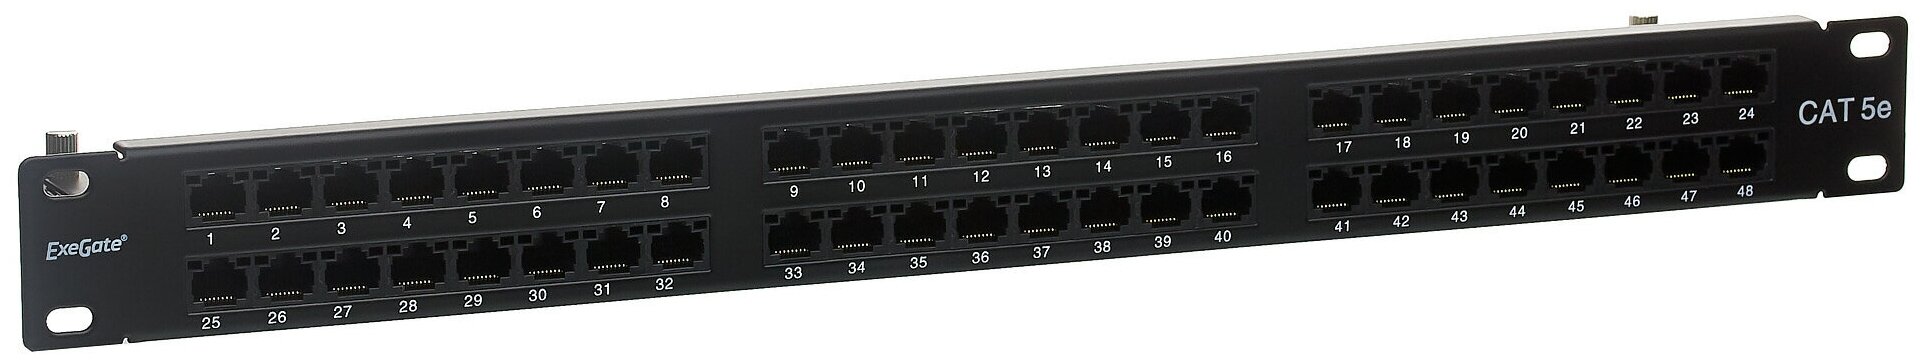 Exegate EX281081RUS Патч-панель UTP 19 48 port кат.5e ExeGate разъём KRONE&110 (dual IDC), 1U, RoHS, цвет черный